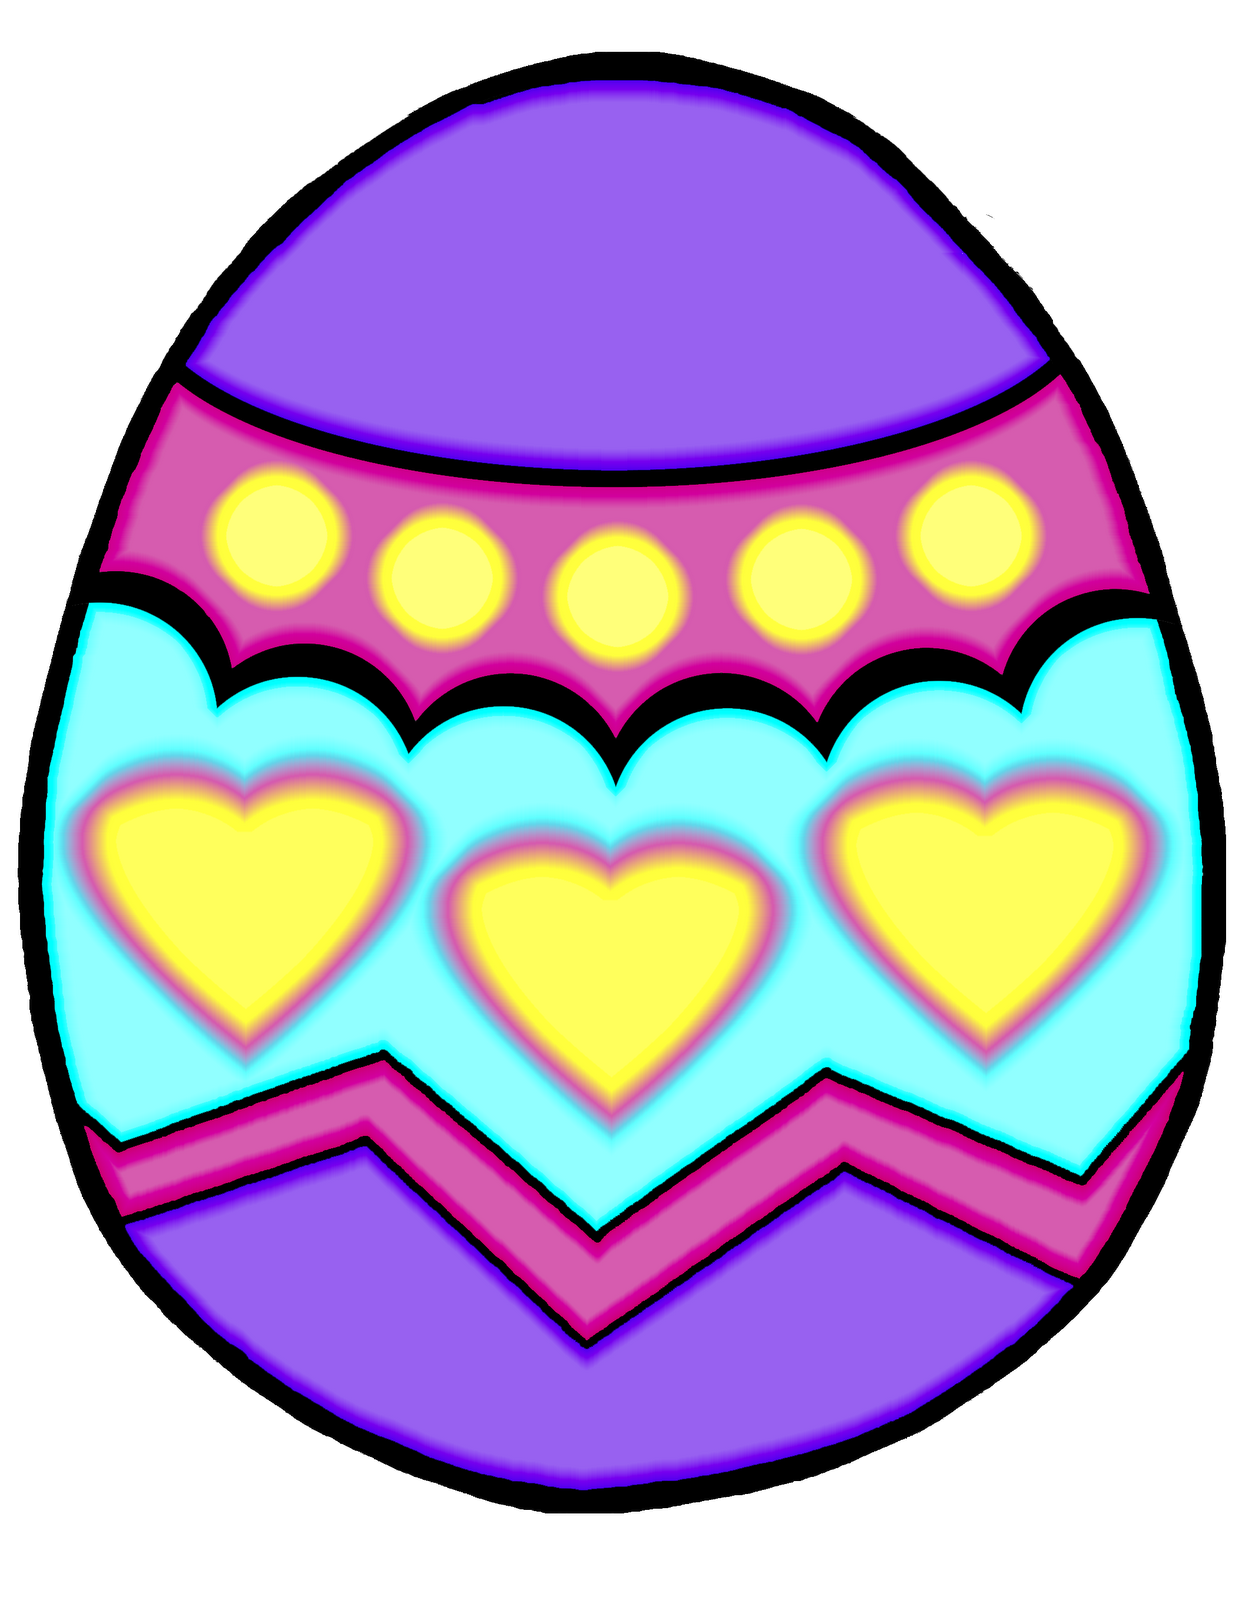 Easter Egg Clip Art Images - ClipArt Best